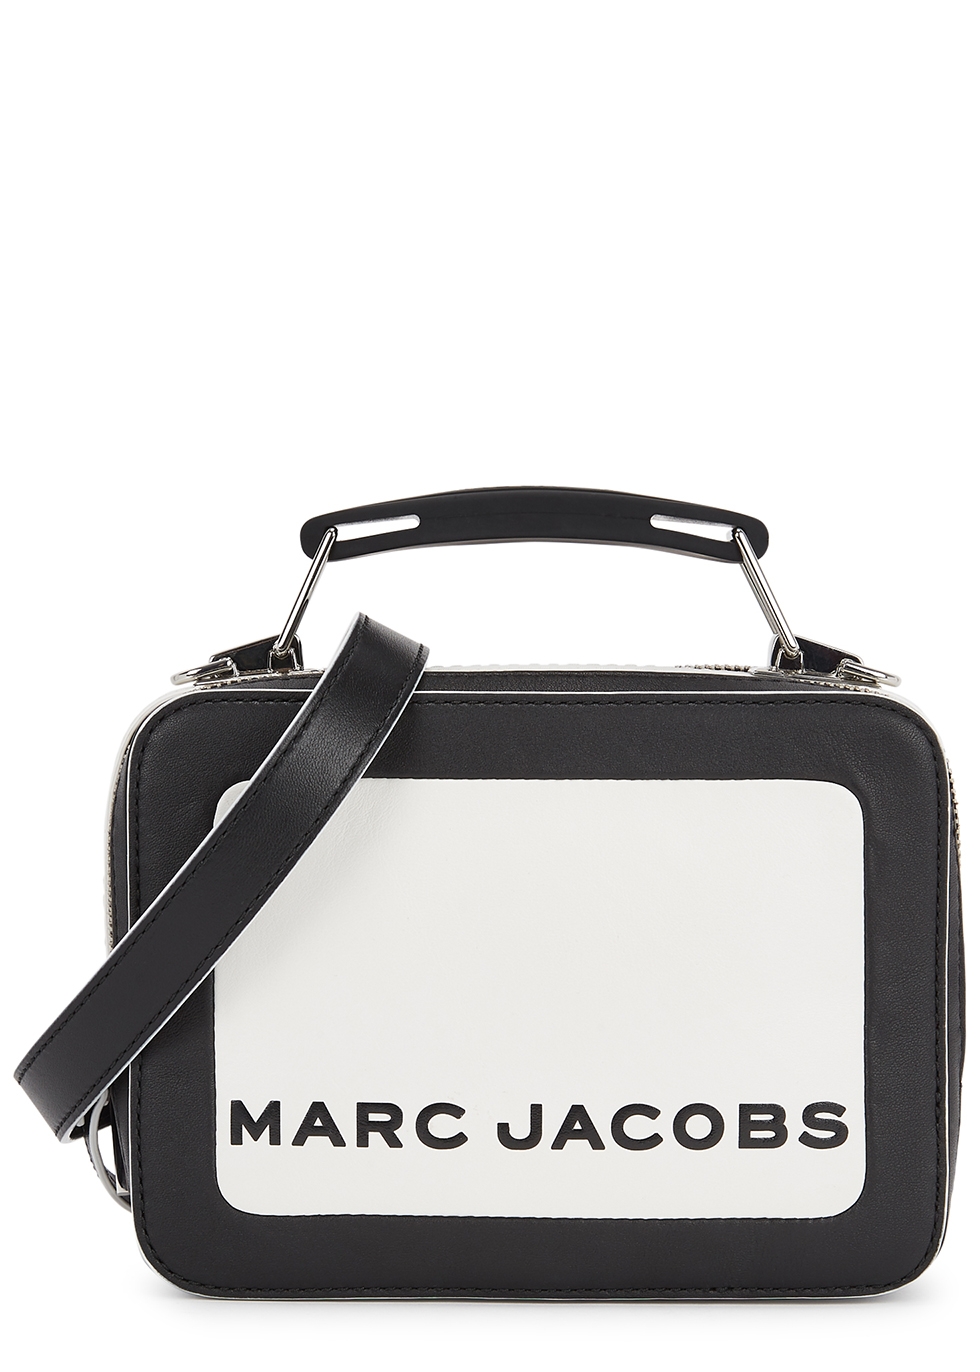 Marc Jacobs The Box 20 monochrome leather cross-body bag - Harvey Nichols